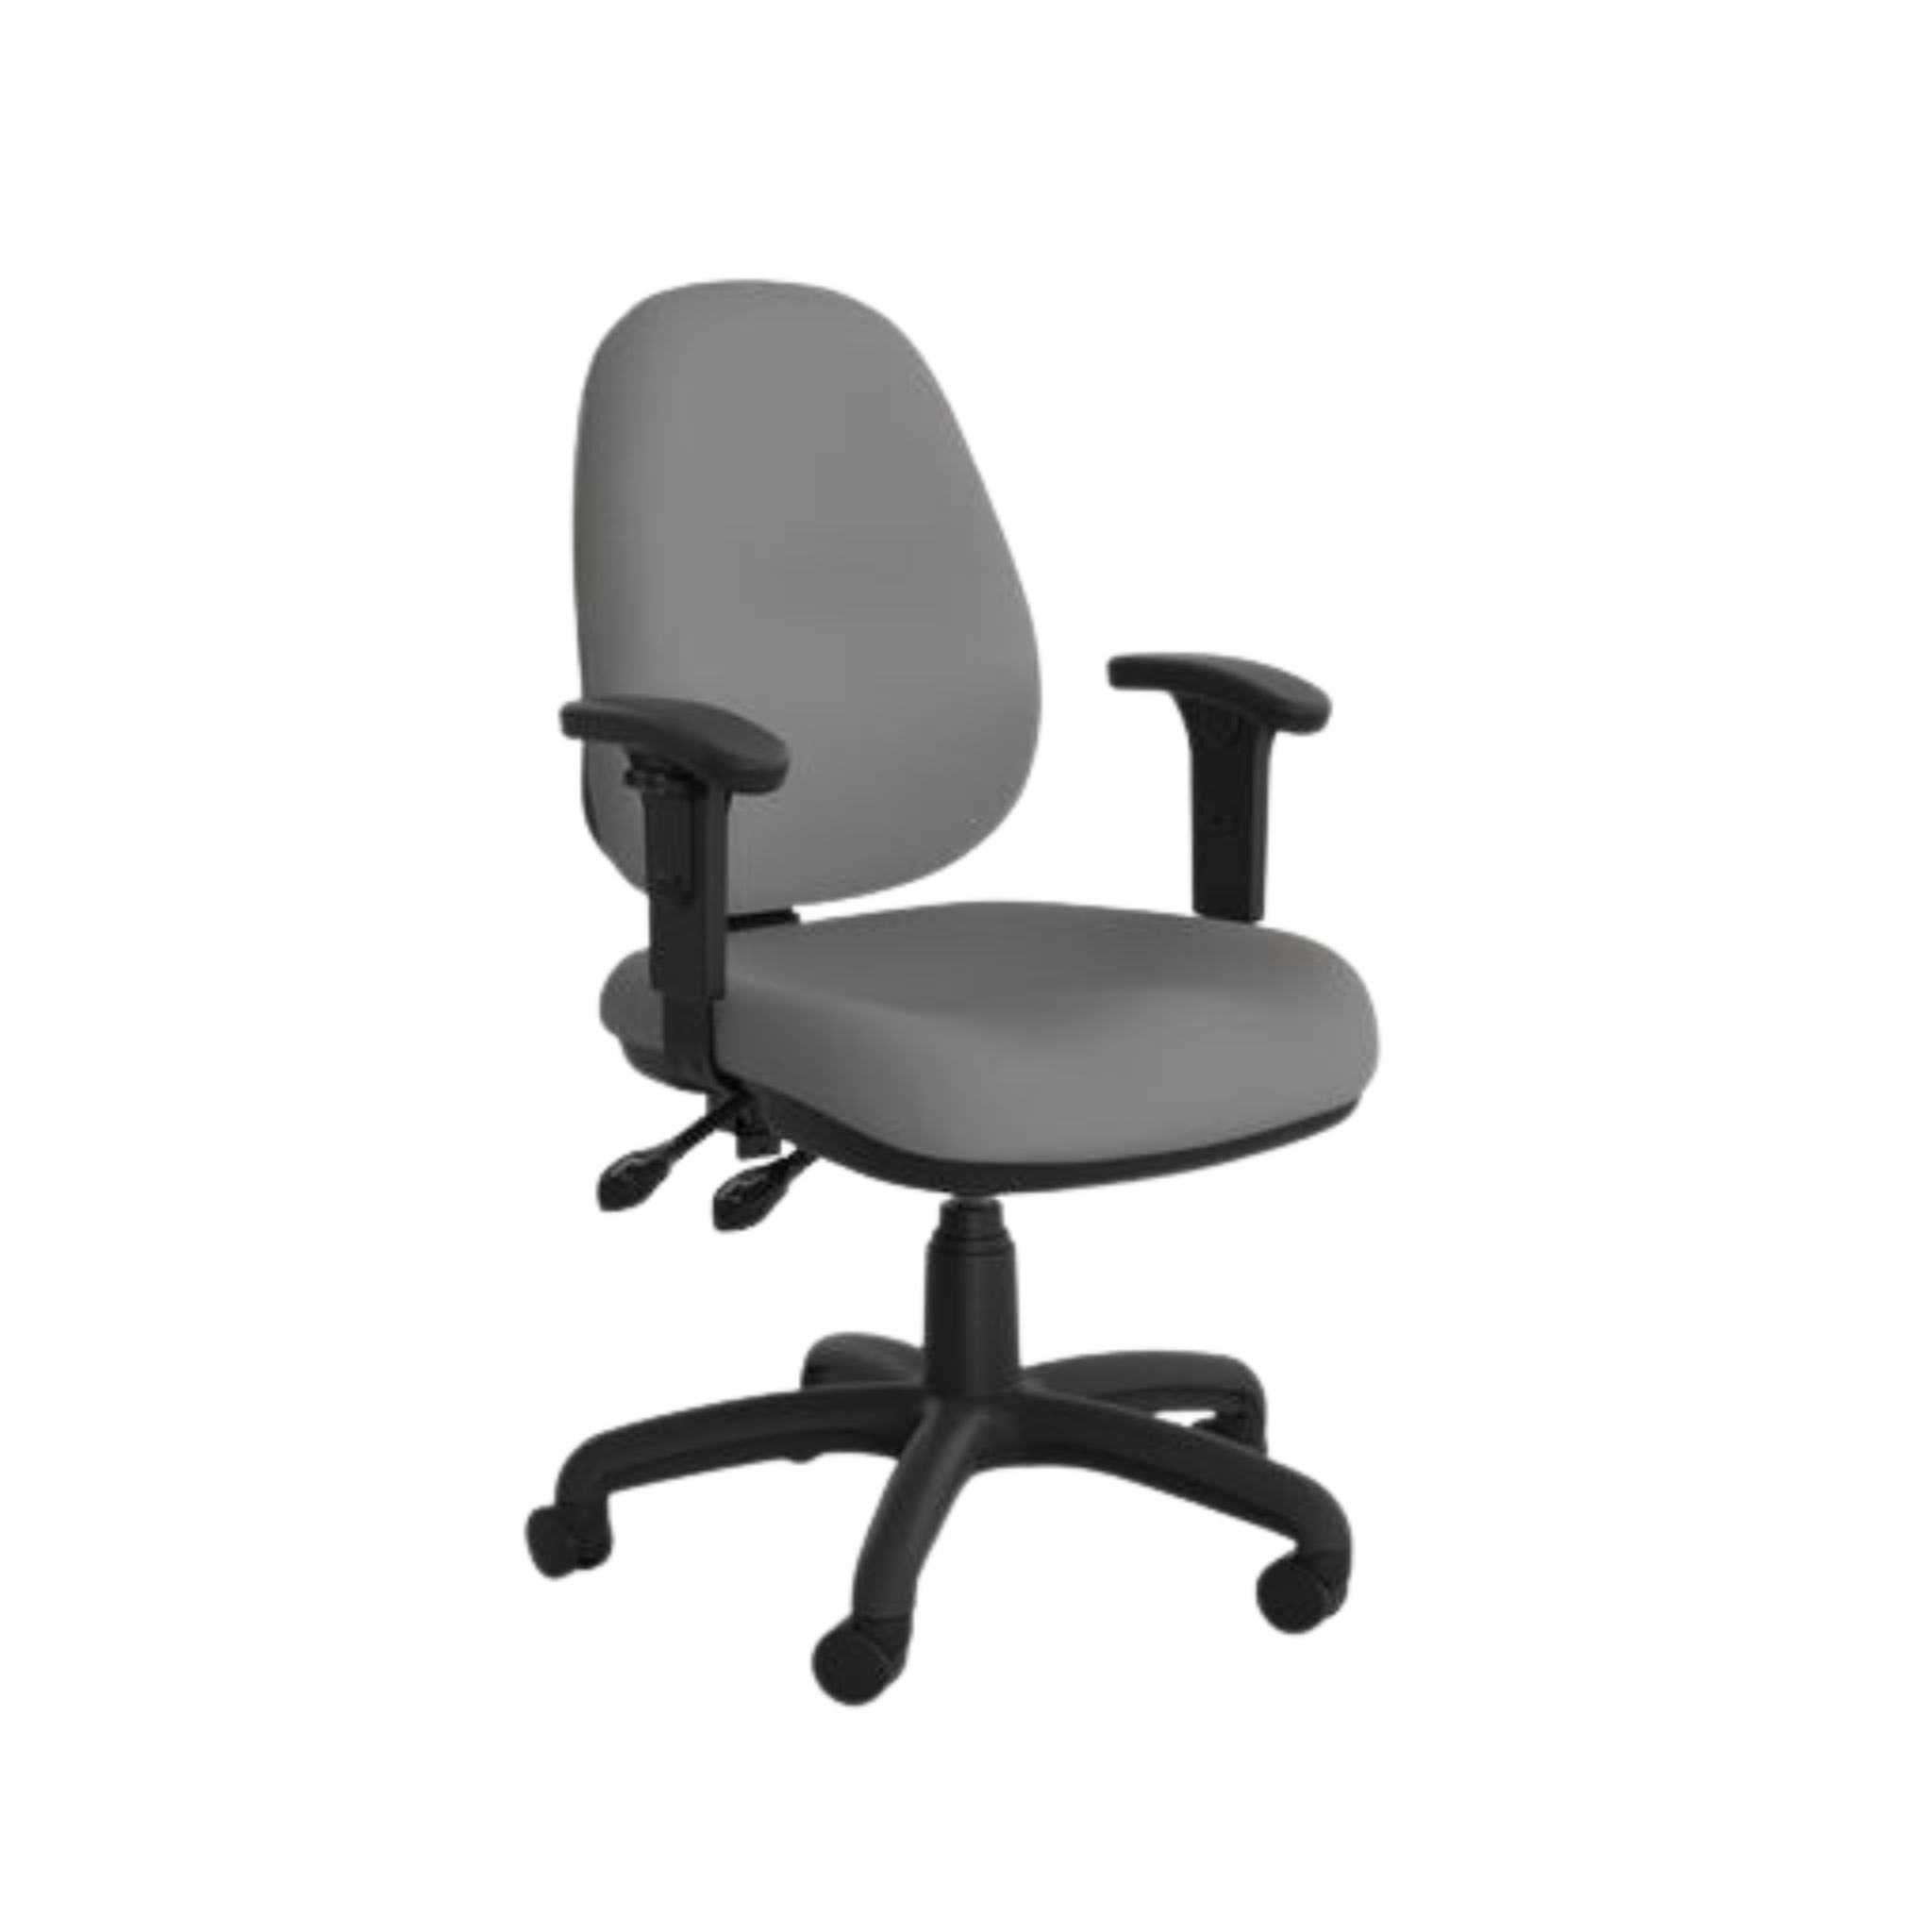 Evo Mega Luxe Chair